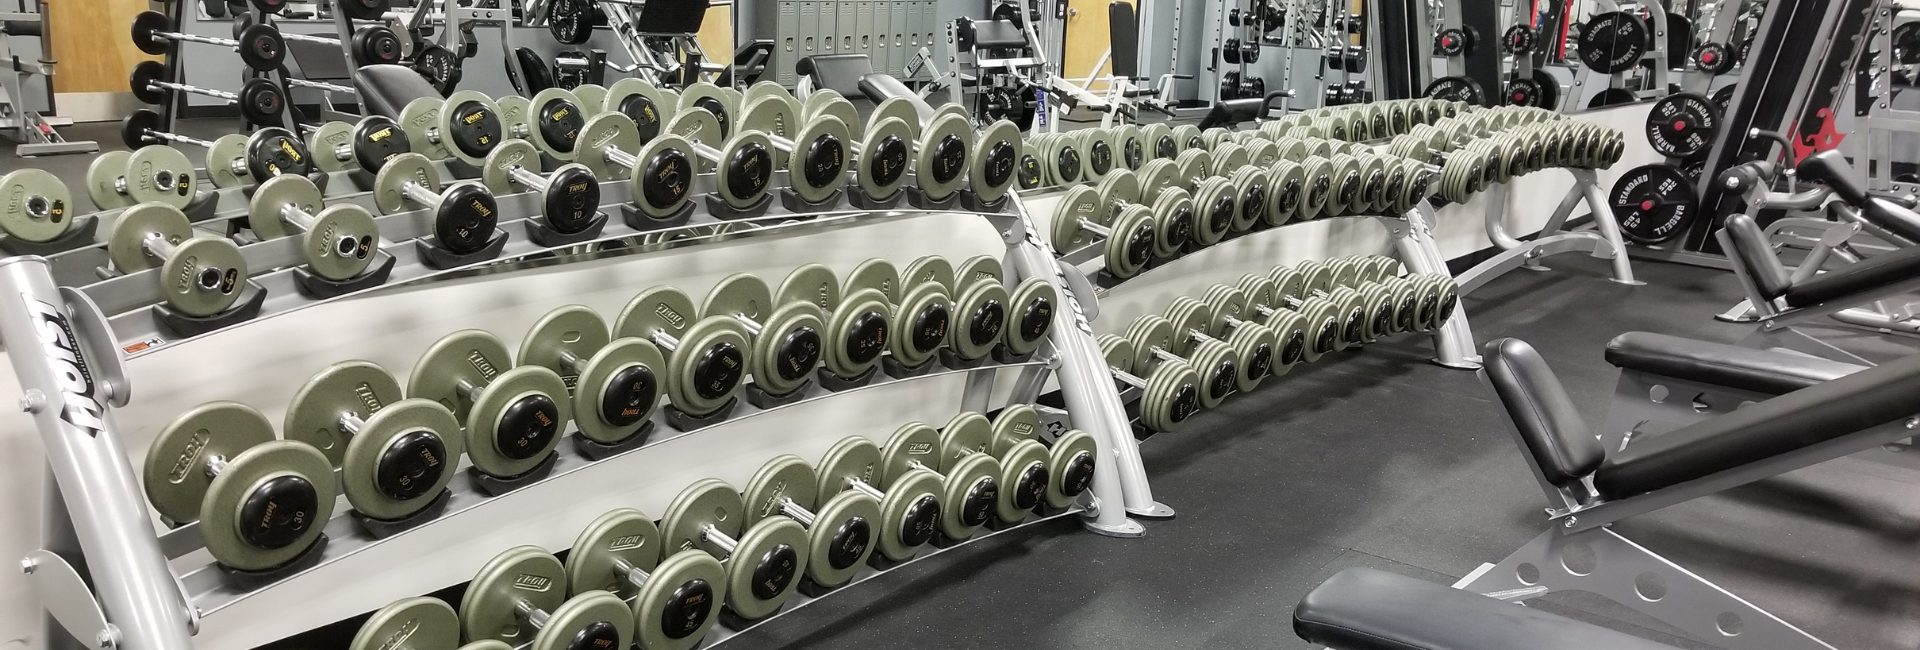 a strength training area in an albuquerque gym